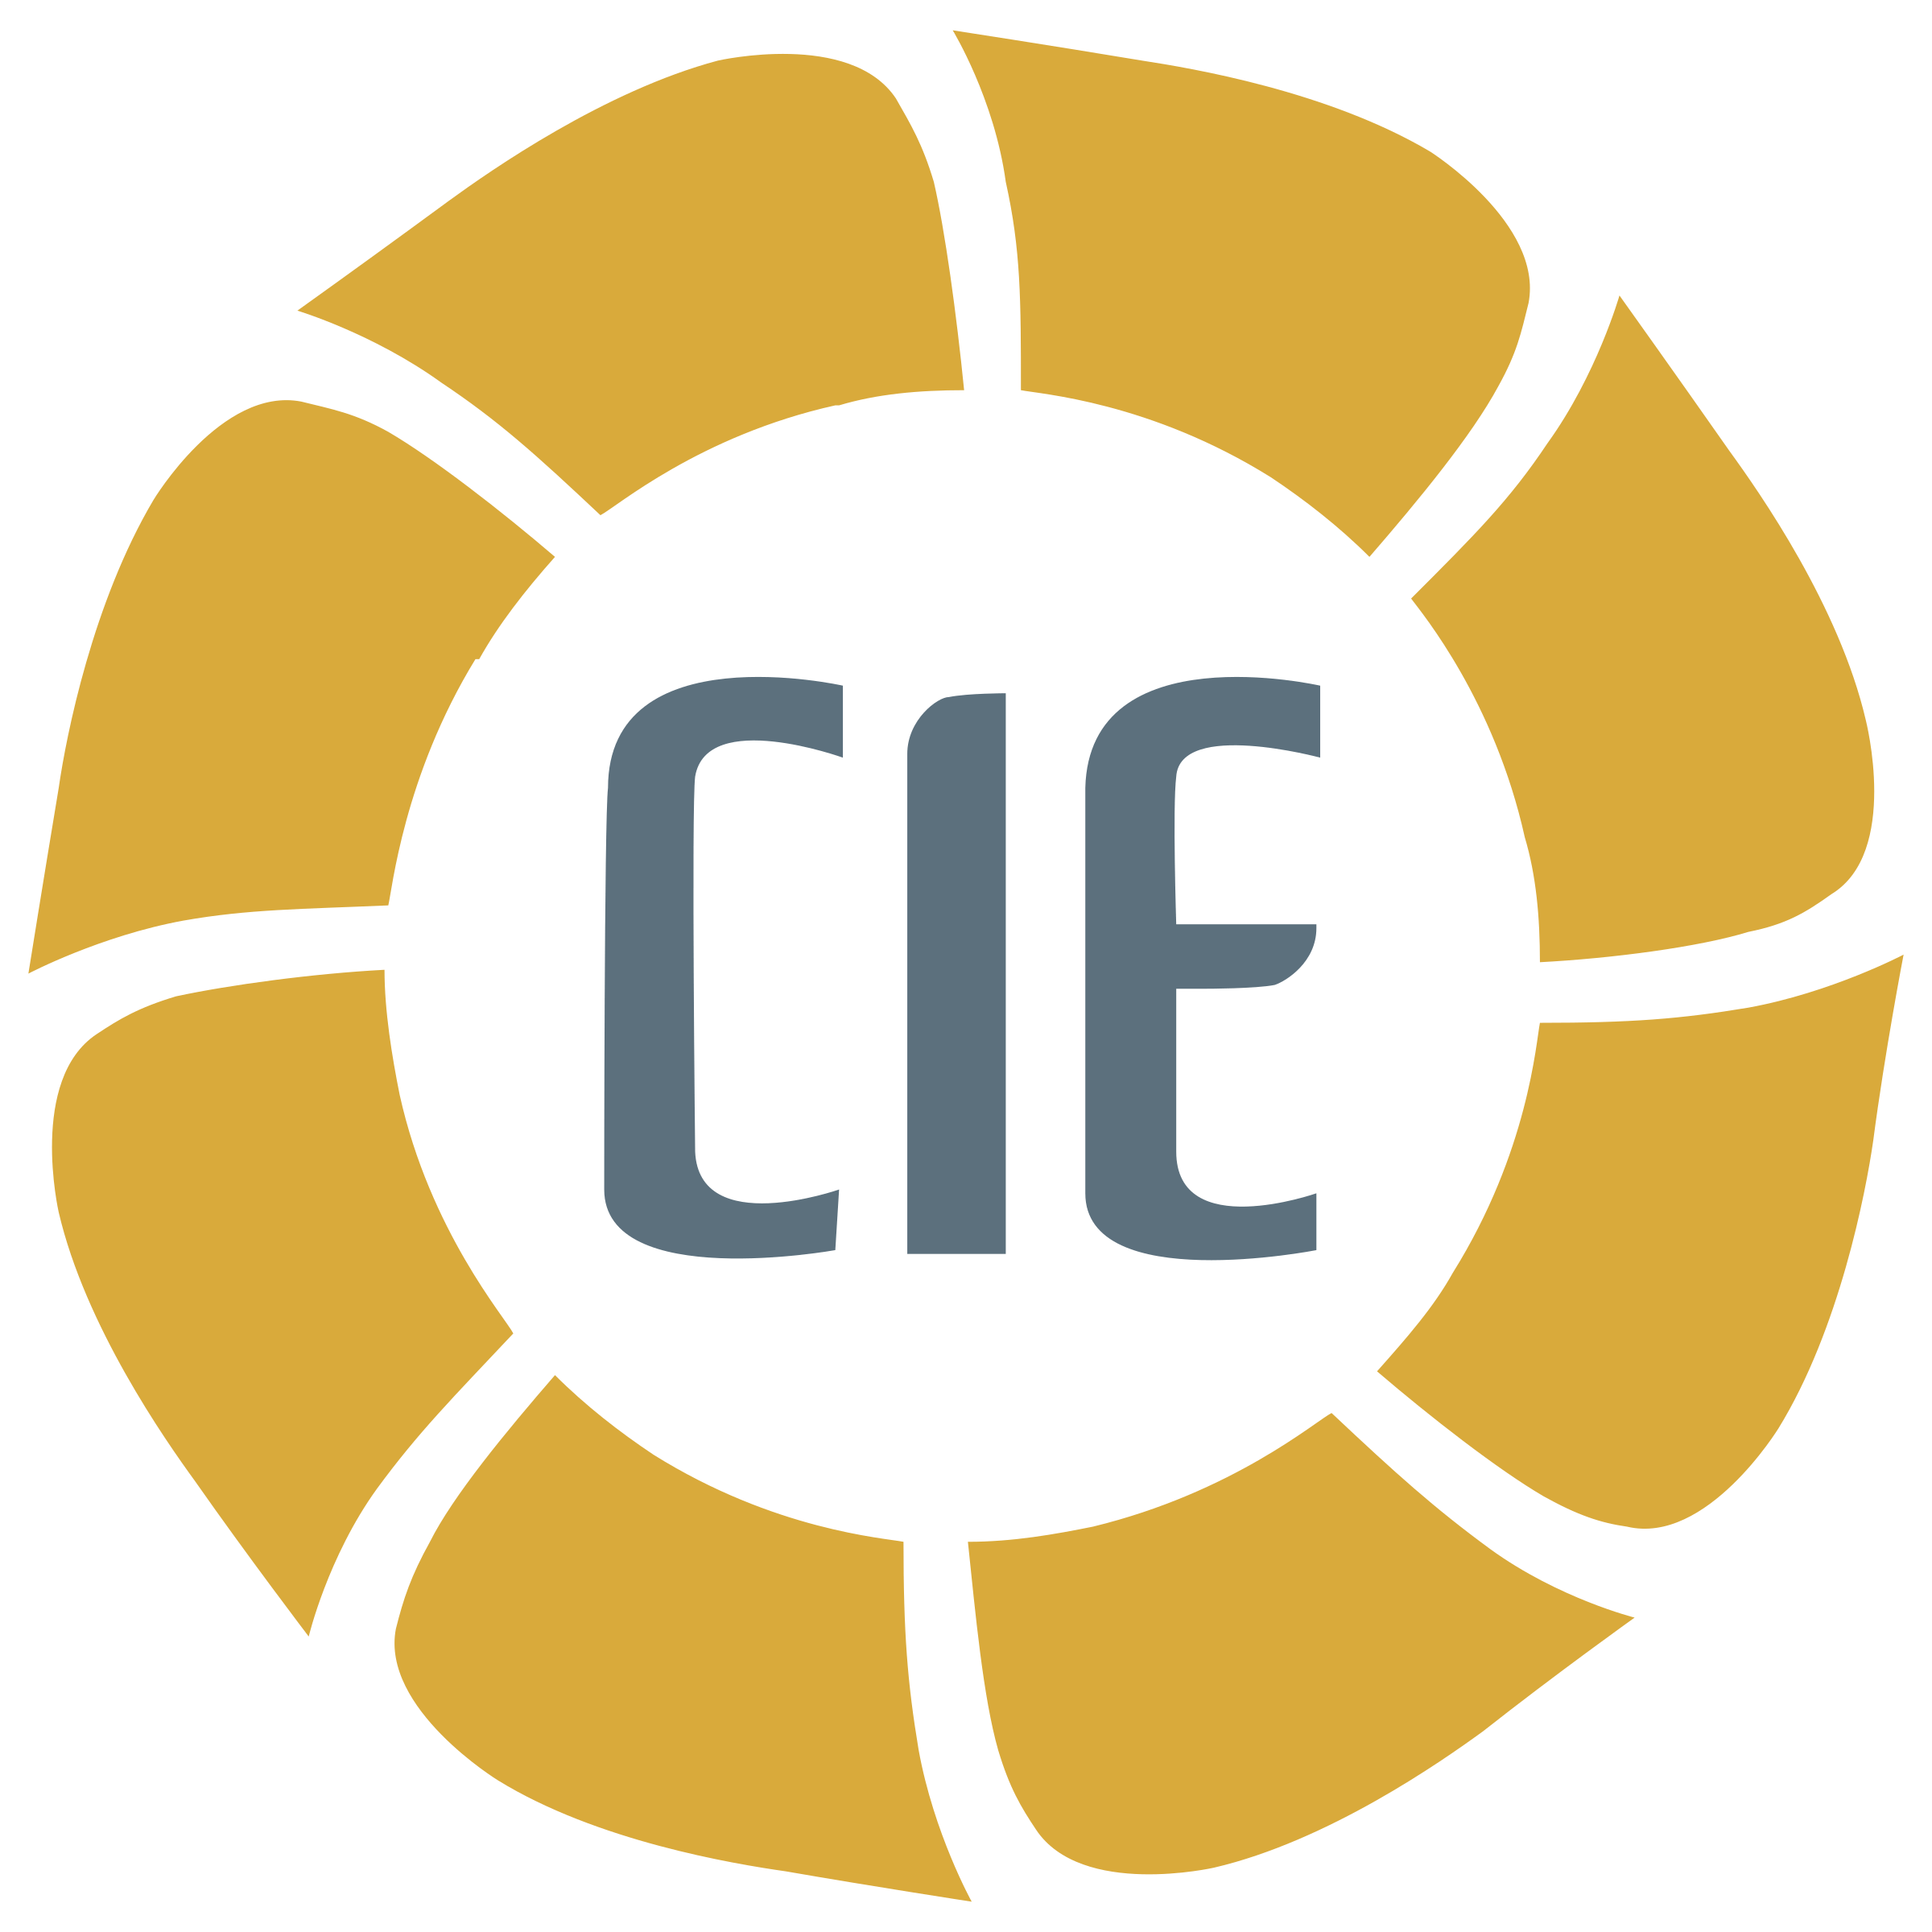 CIE Logo - CIE Group Logo PNG Transparent & SVG Vector